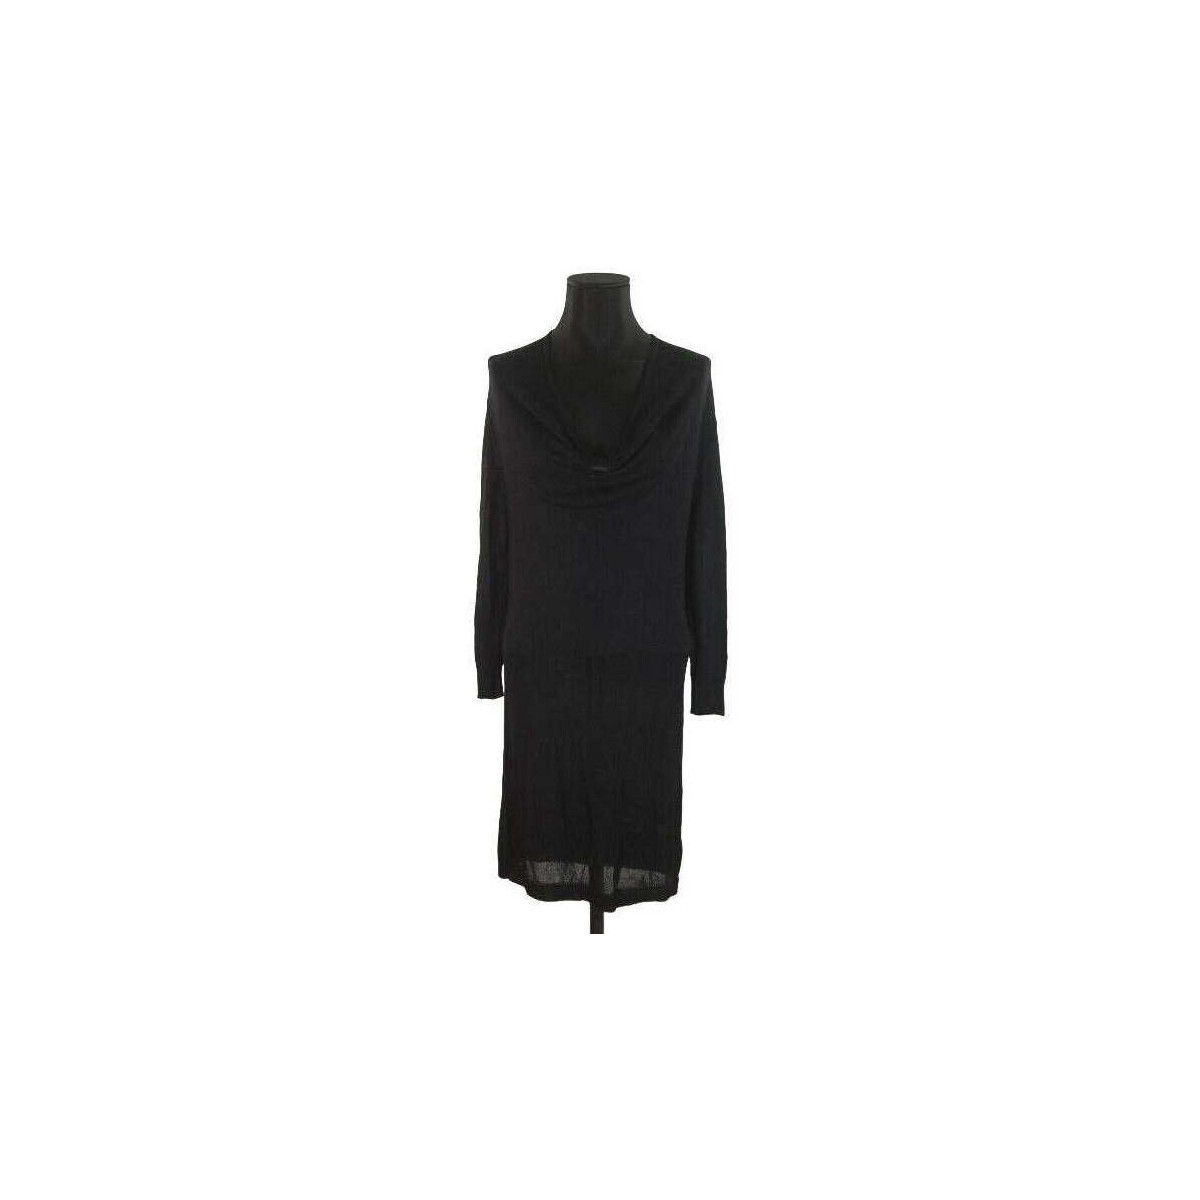 Vêtements Femme Robes See by Chloé Robe noir Noir